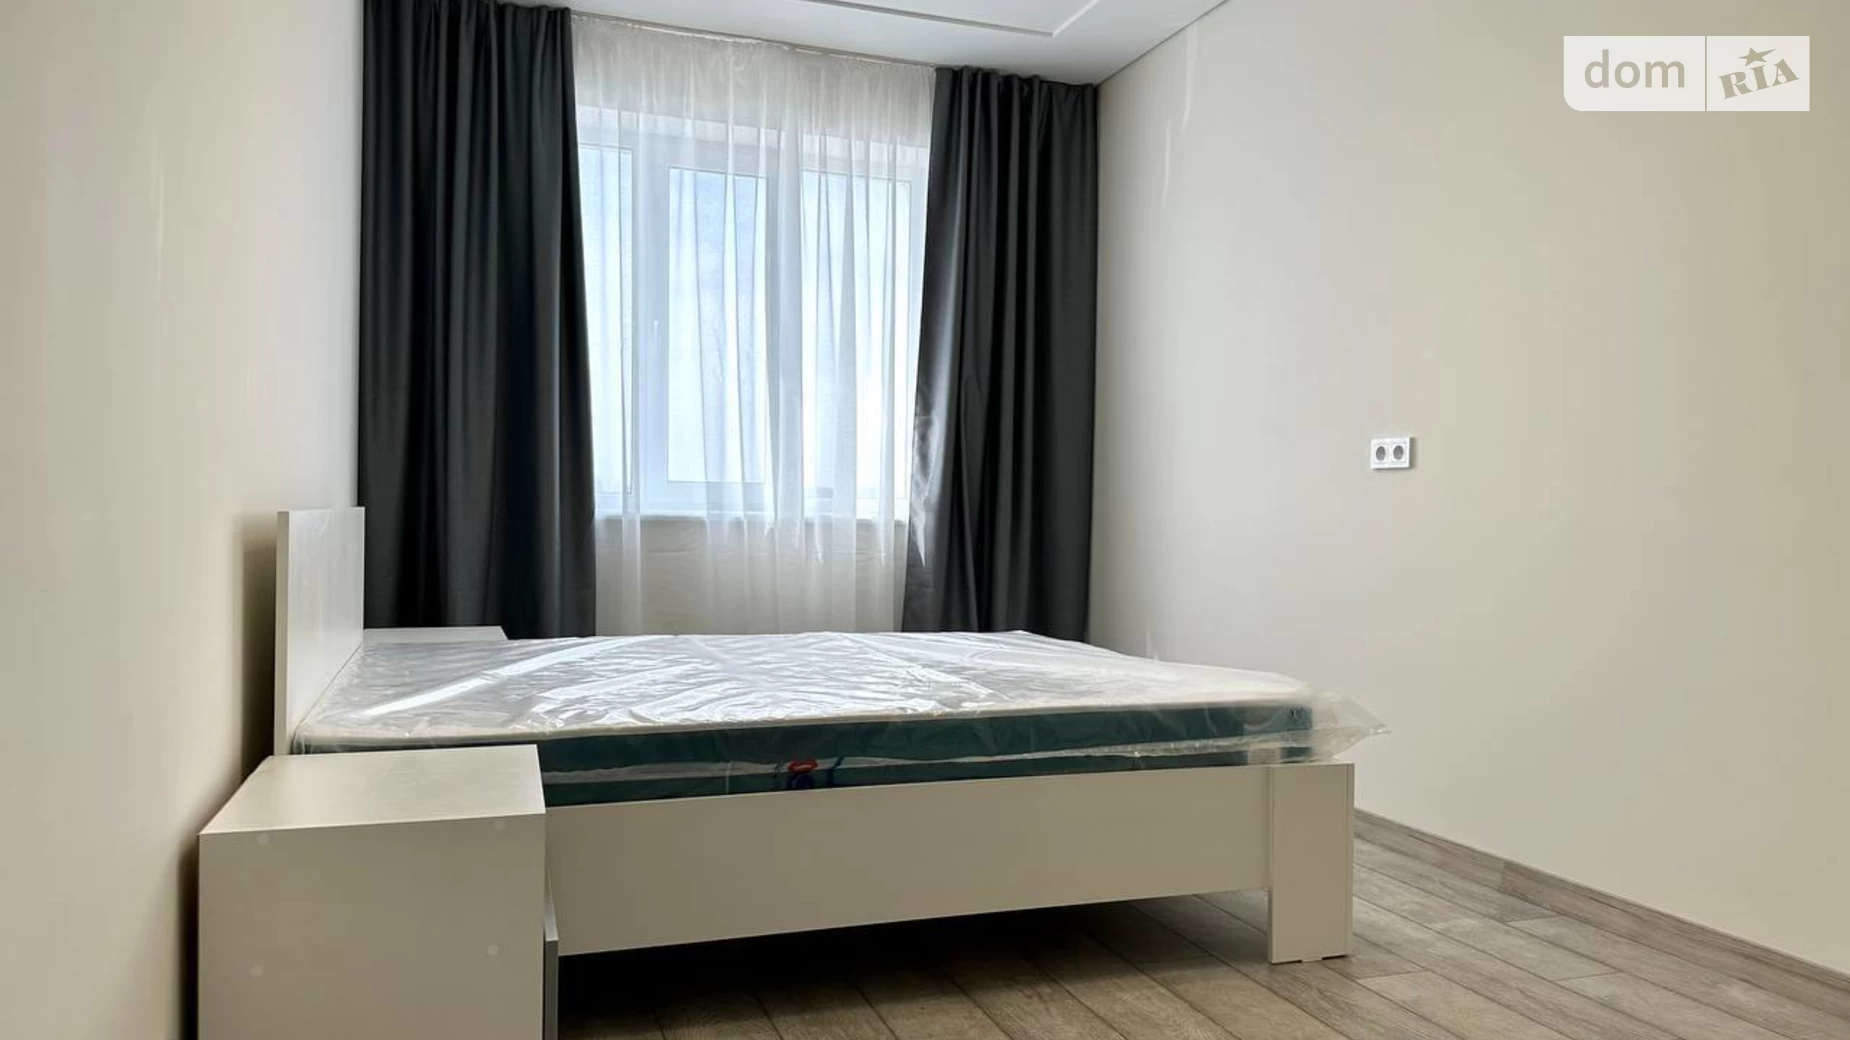 Продается 1-комнатная квартира 43.4 кв. м в Ивано-Франковске - фото 4